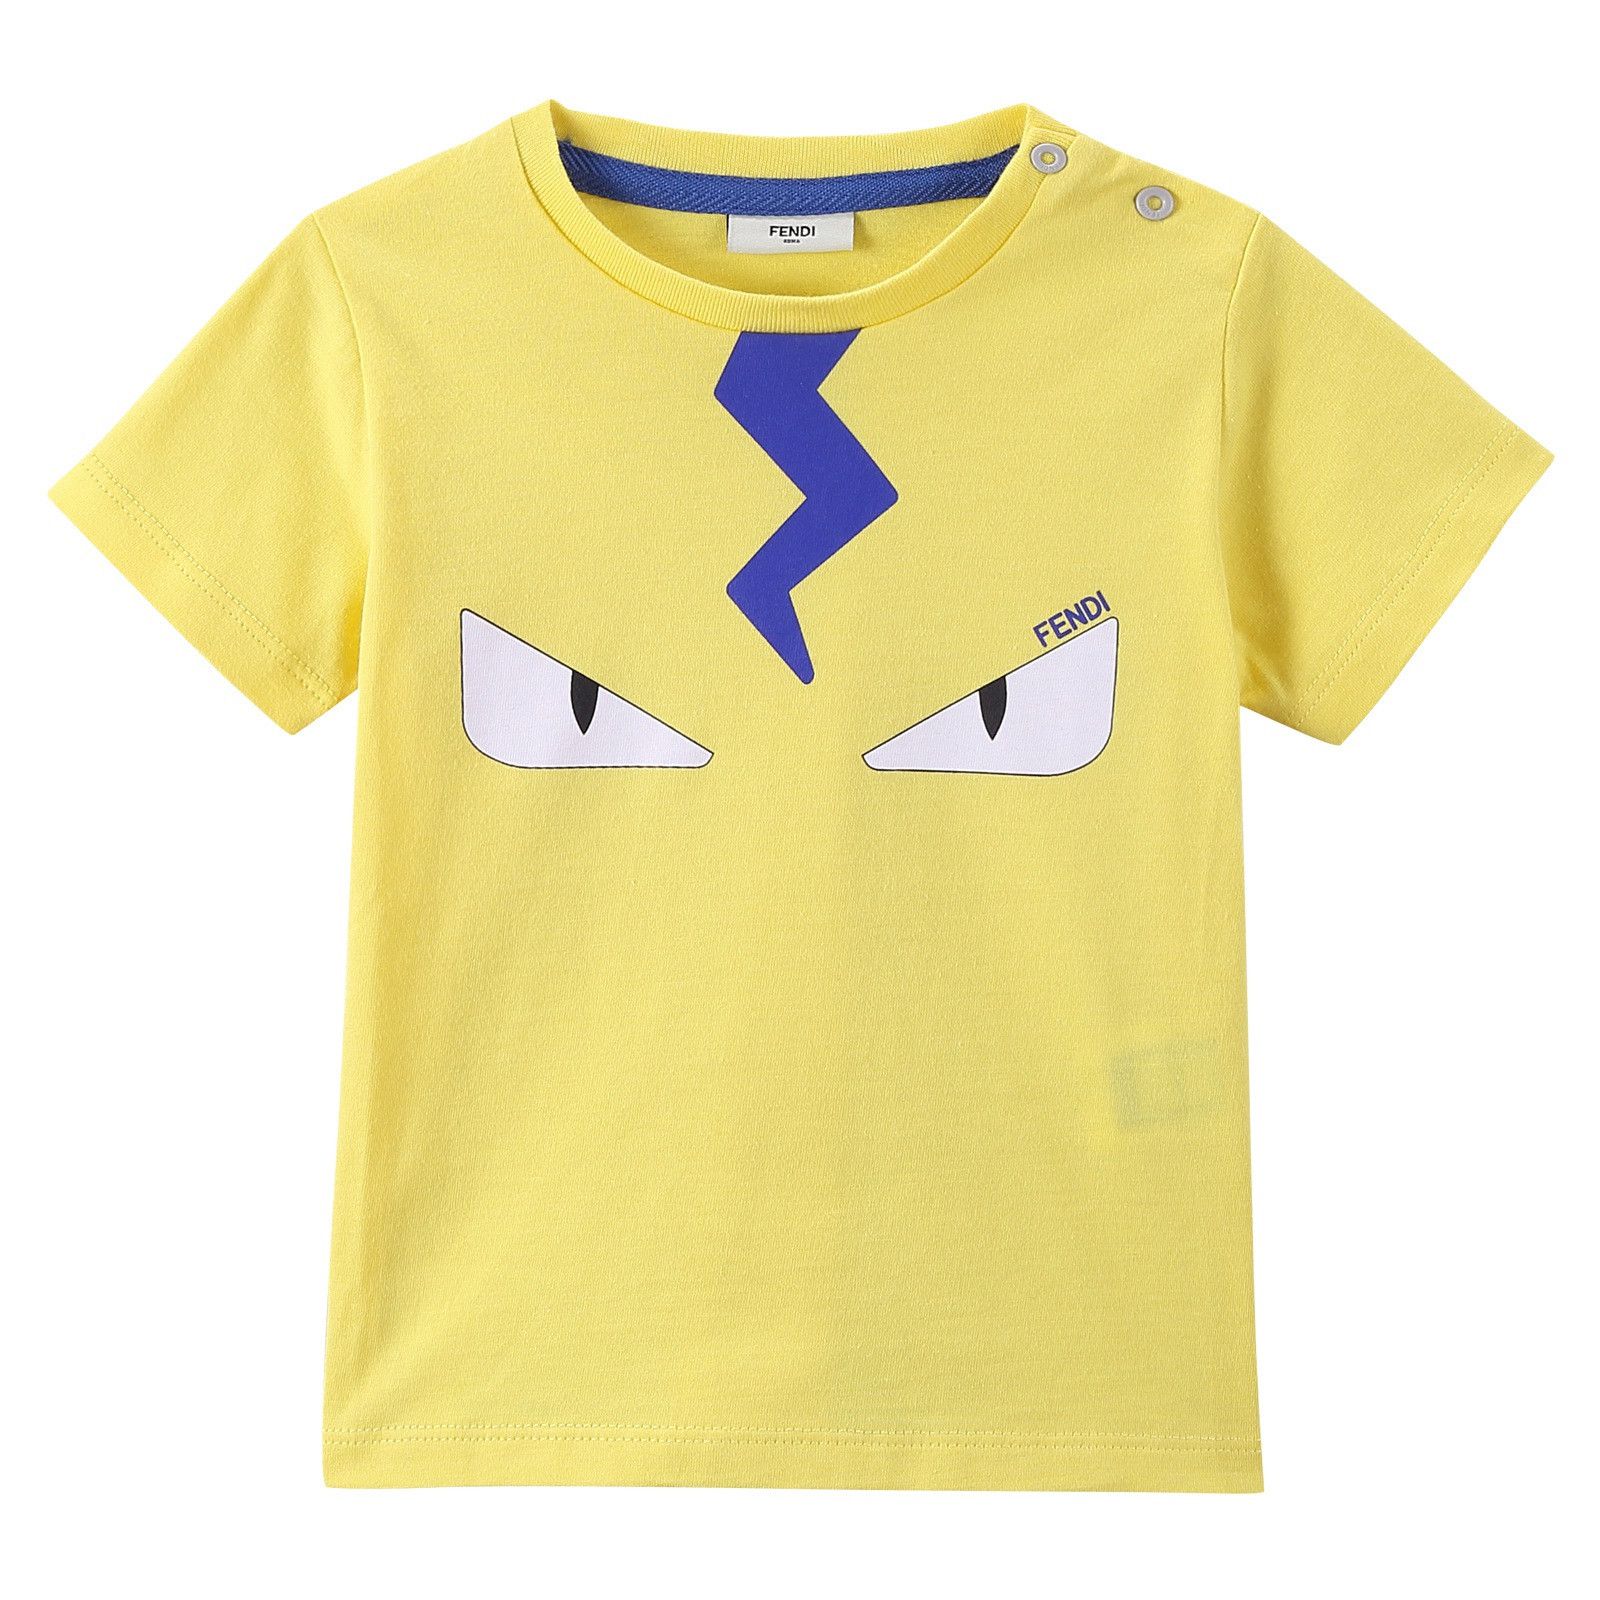 Baby Boys Yellow Cotton 'Monster' Printed T-Shirt - CÉMAROSE | Children's Fashion Store - 1